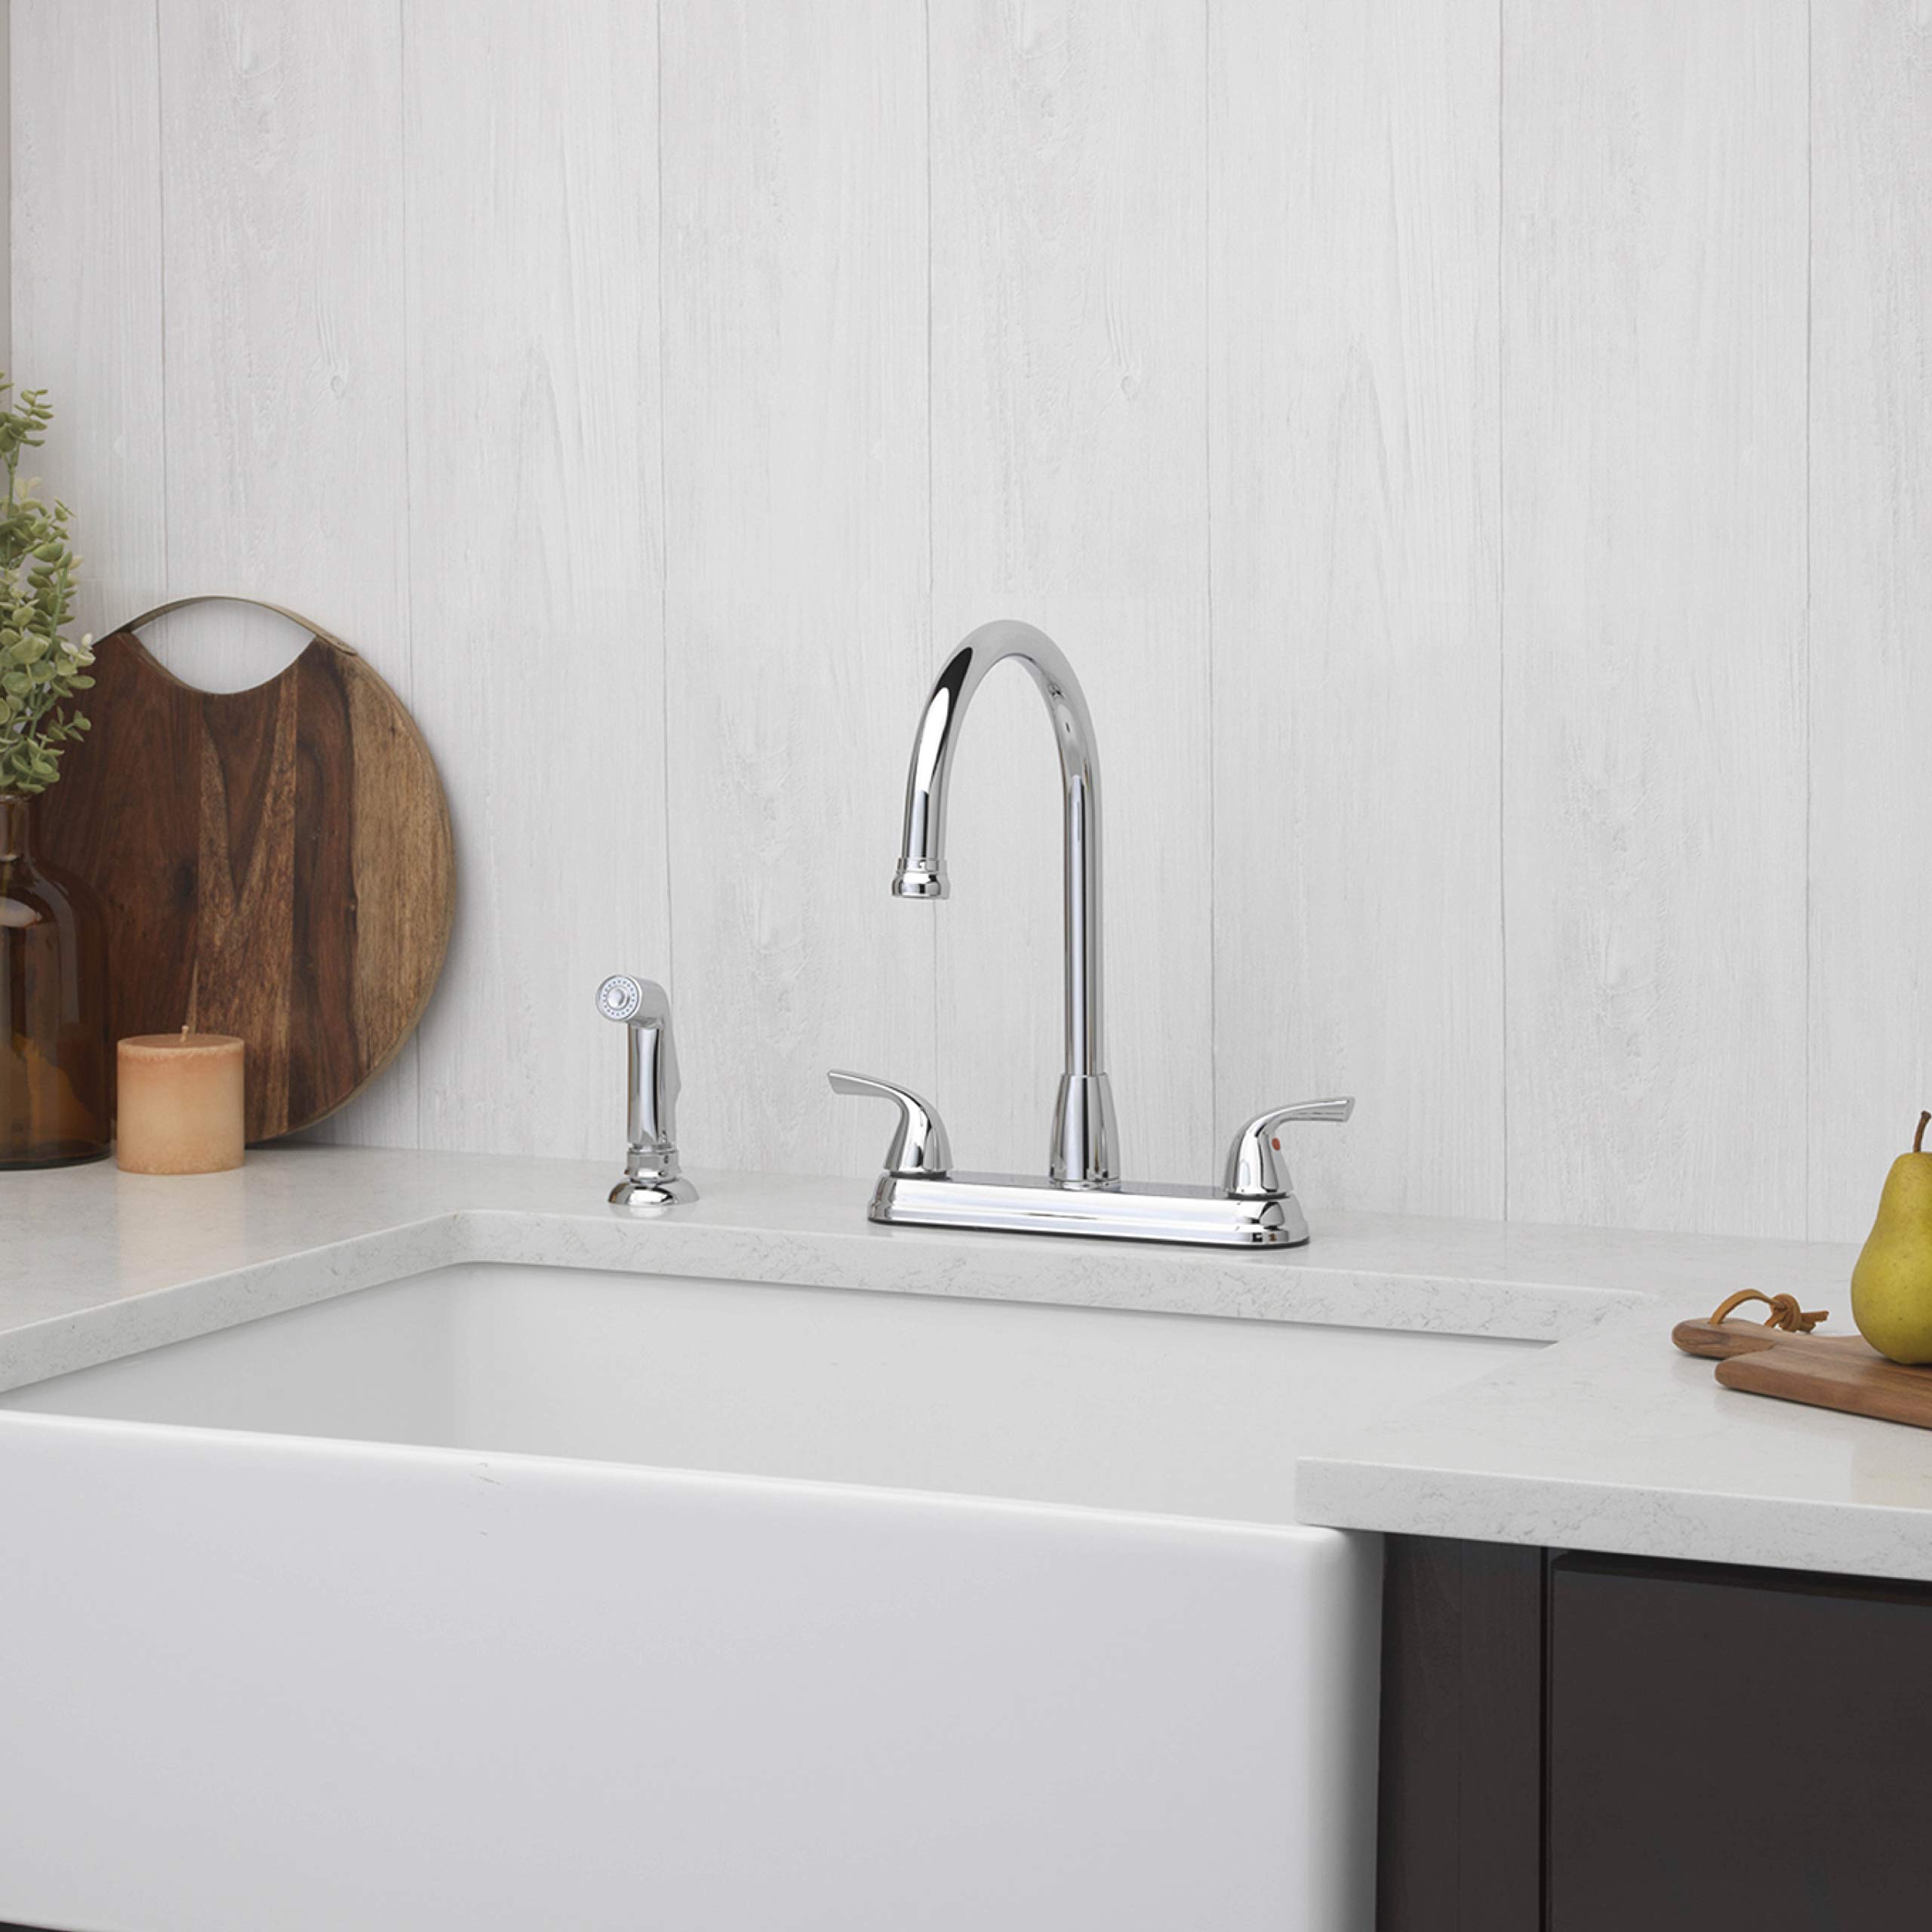 Aqua Vista 21-K822-AVD Kitchen Sink Faucet with Side Spray, Polished Chrome High Arc